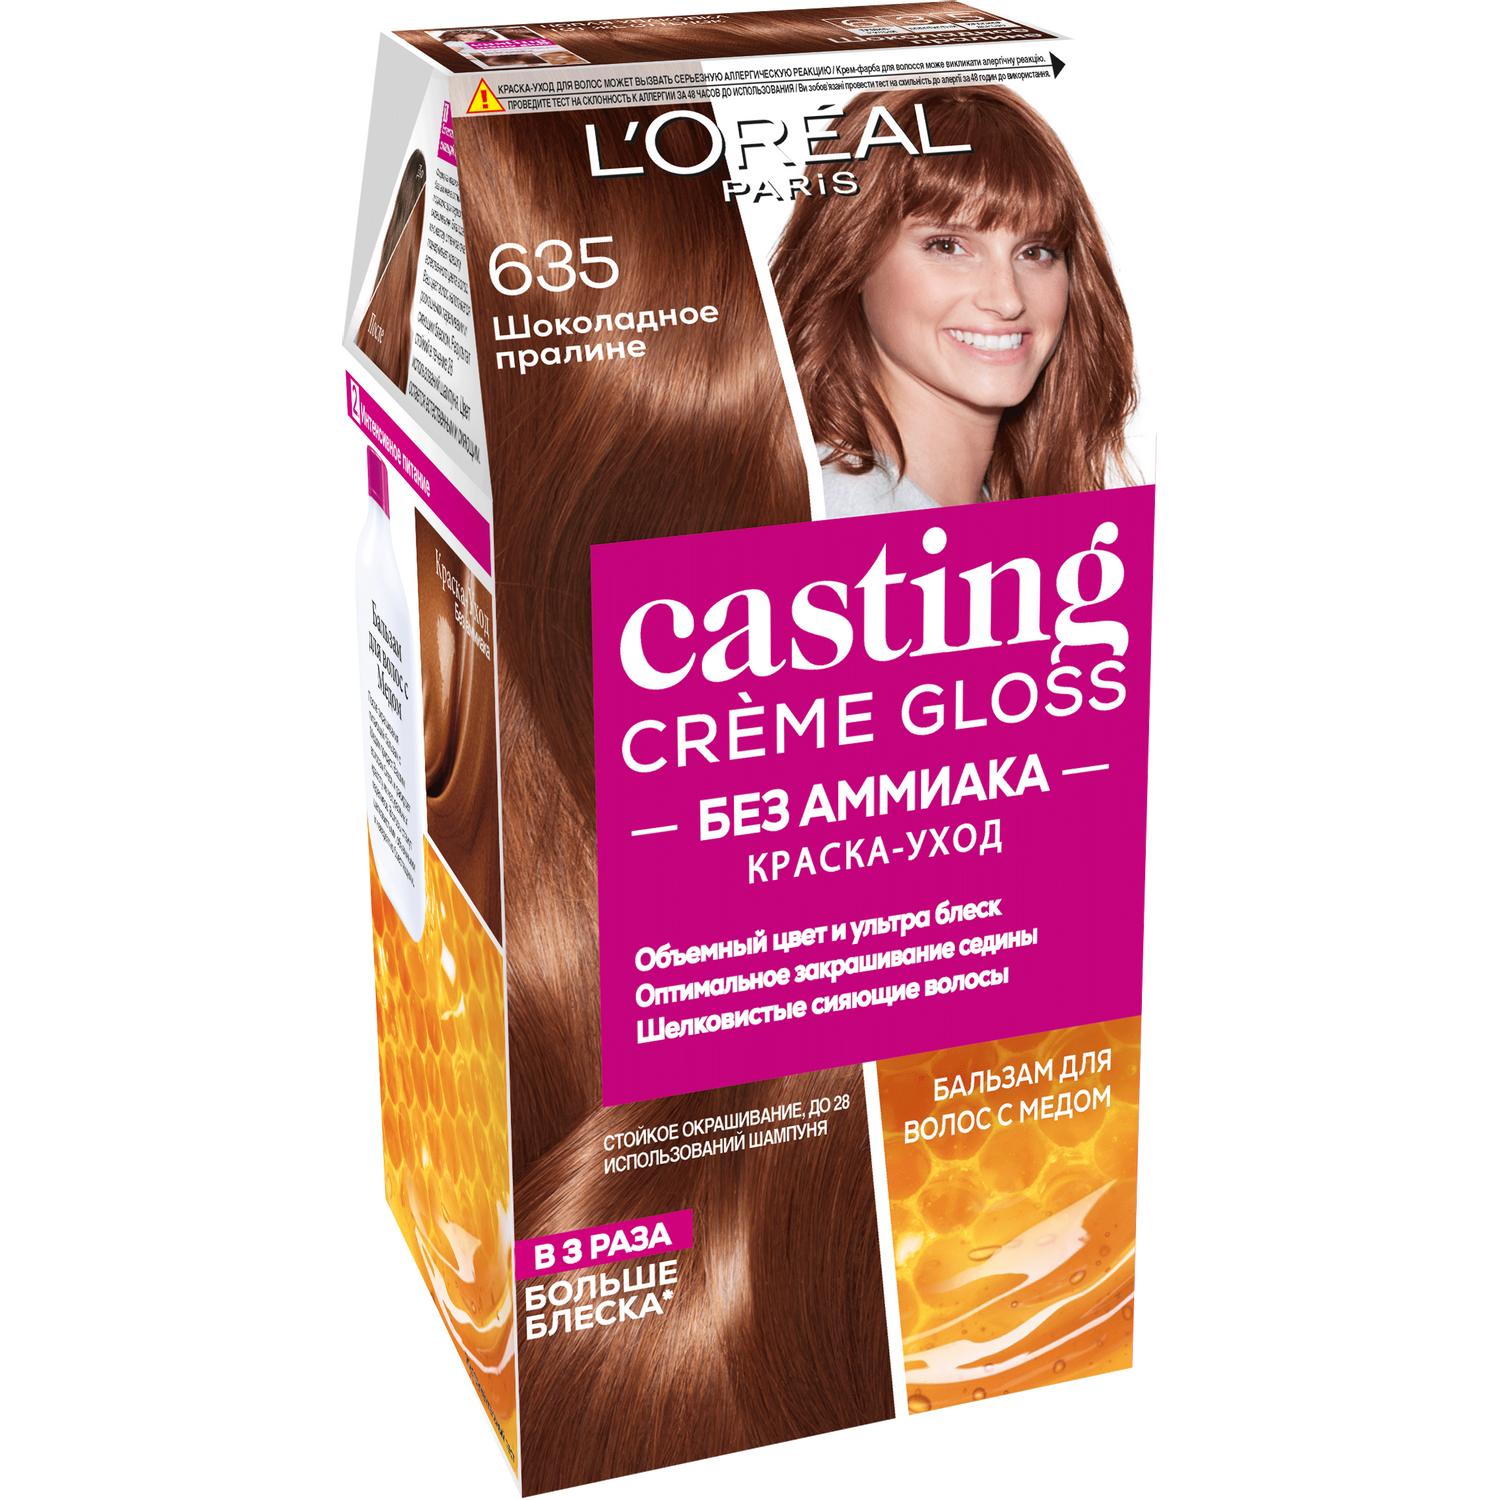 Краска для волос L'Oreal Paris Casting Creme Gloss 635 Шоколадное пралине